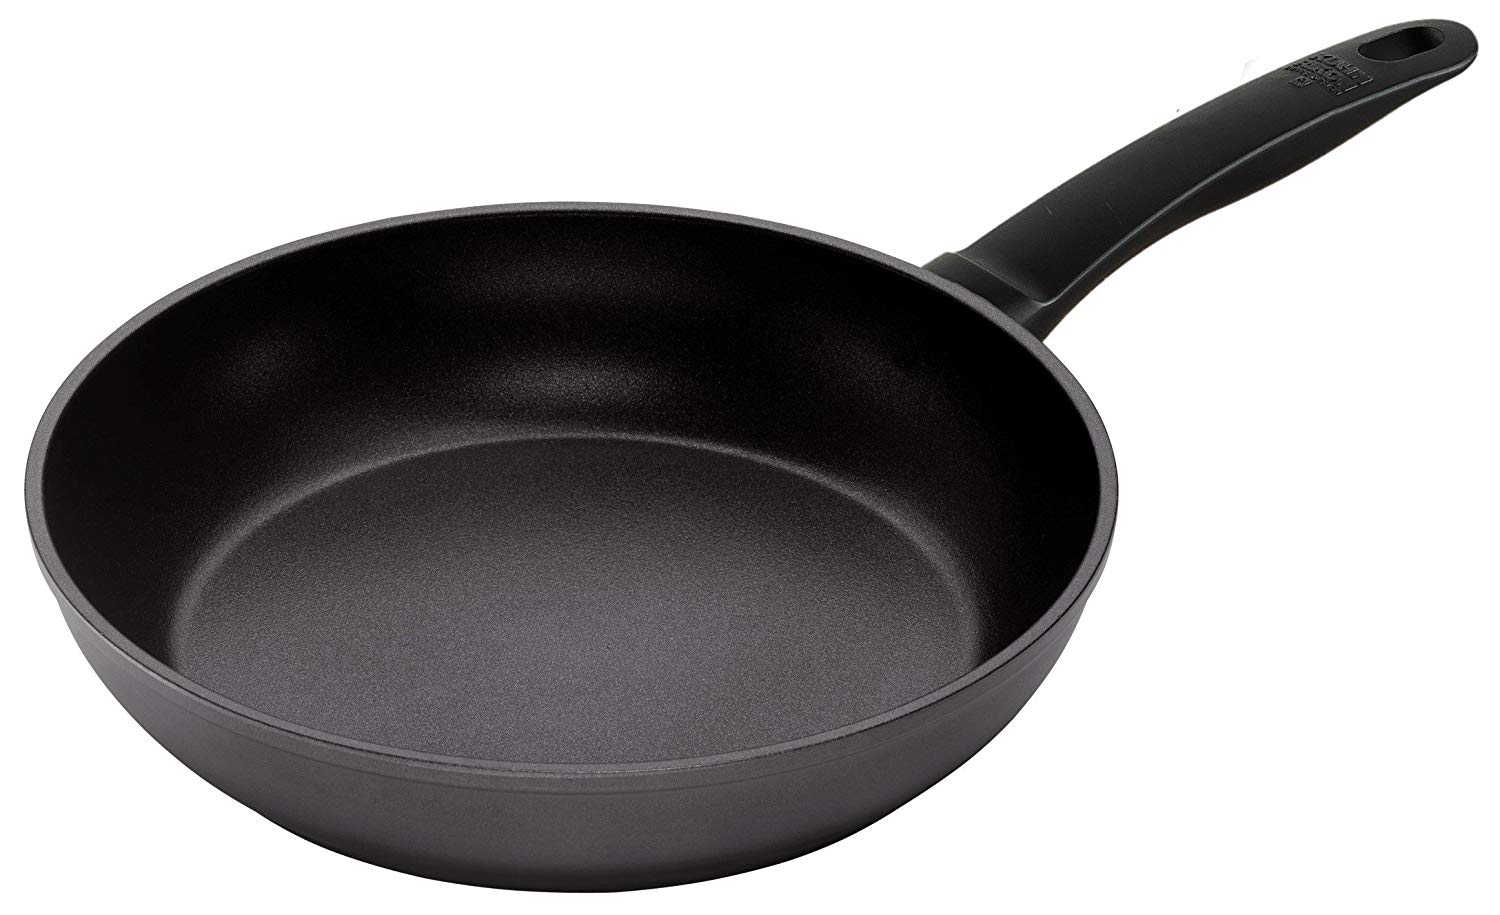 Kuhn Rikon 18 Cm Easy Induction Non Stick Frying Pan, Black